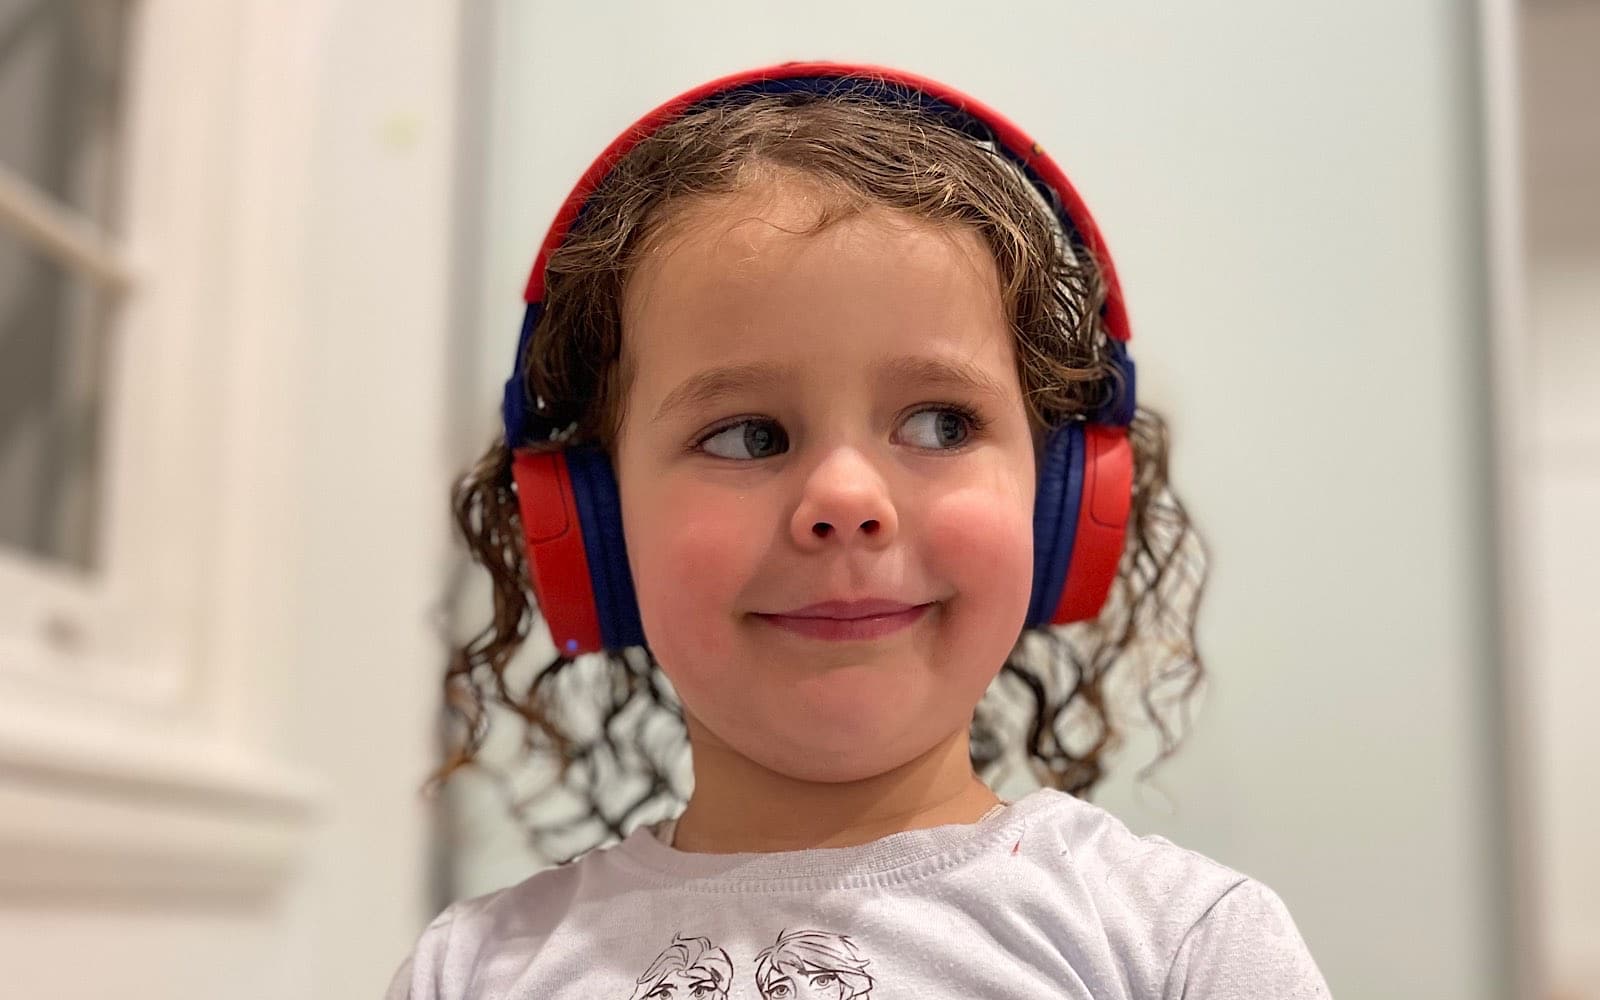 The little one wearing the JBL JR310BT headphones.